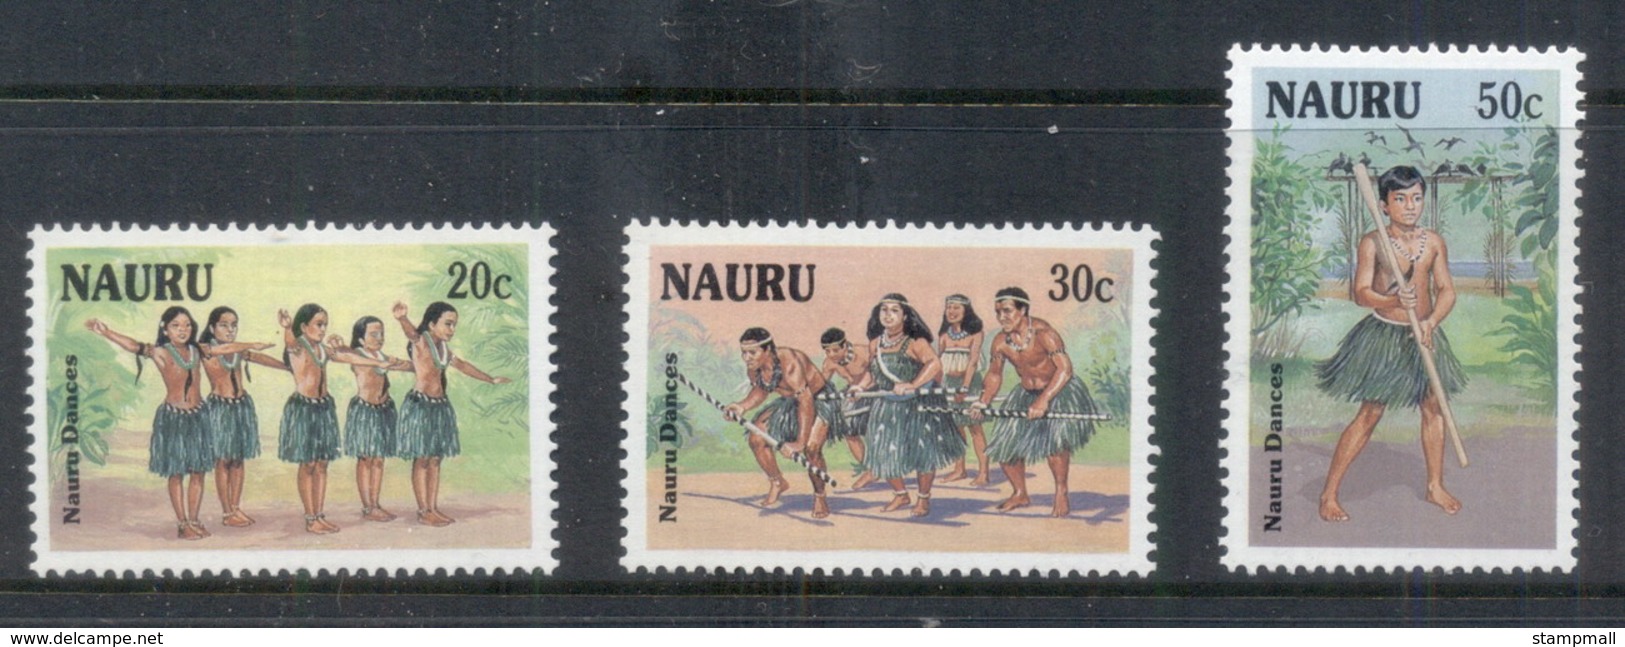 Nauru 1987 Tribal Dances MUH - Nauru